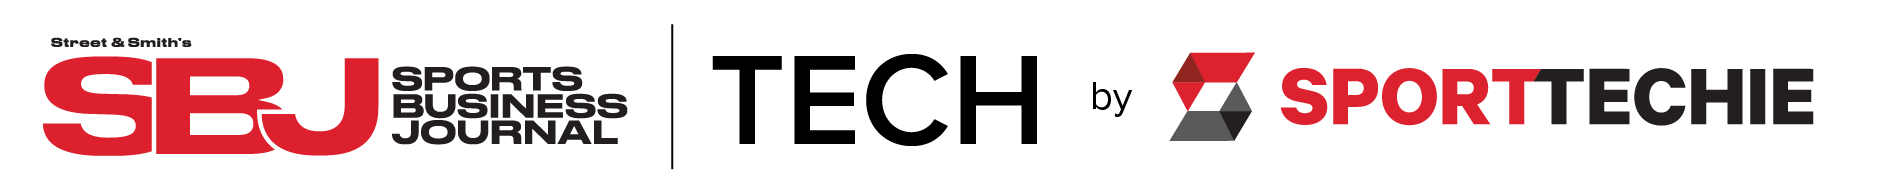 SBJ-Tech-by-SportTechie-header-logo